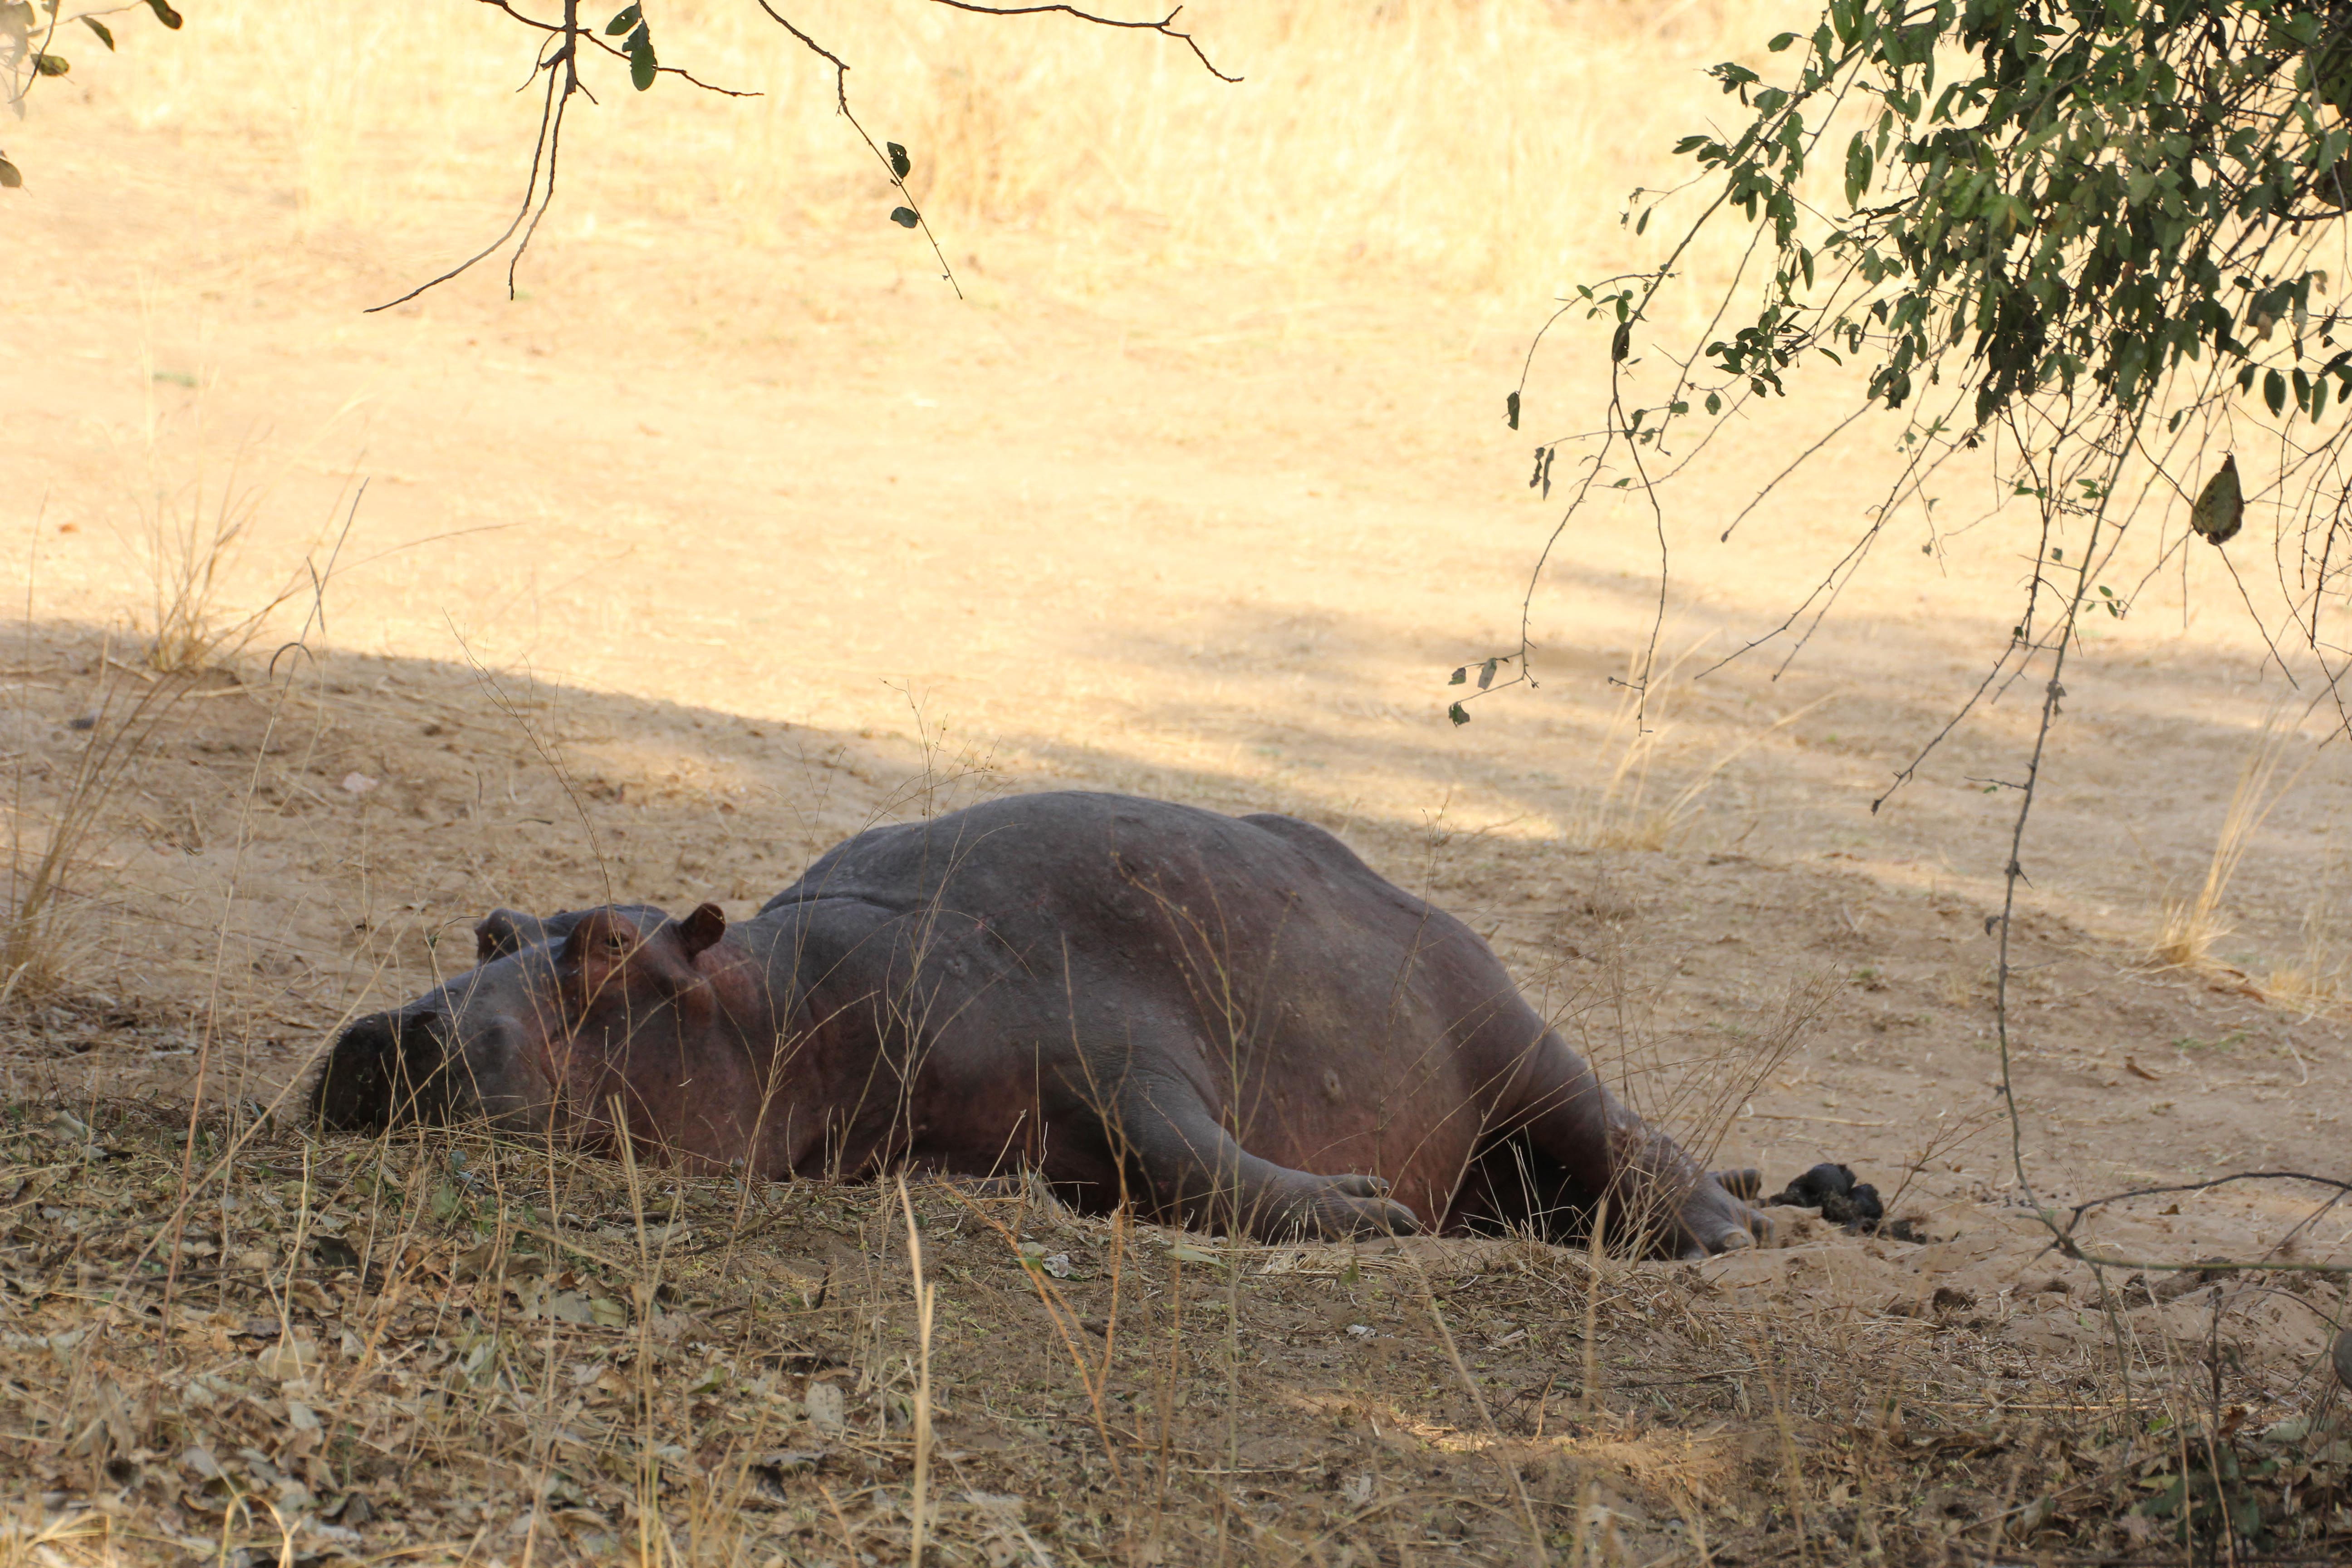 Zambia: Hippo lying in the shadow of a tree near Zambesi River